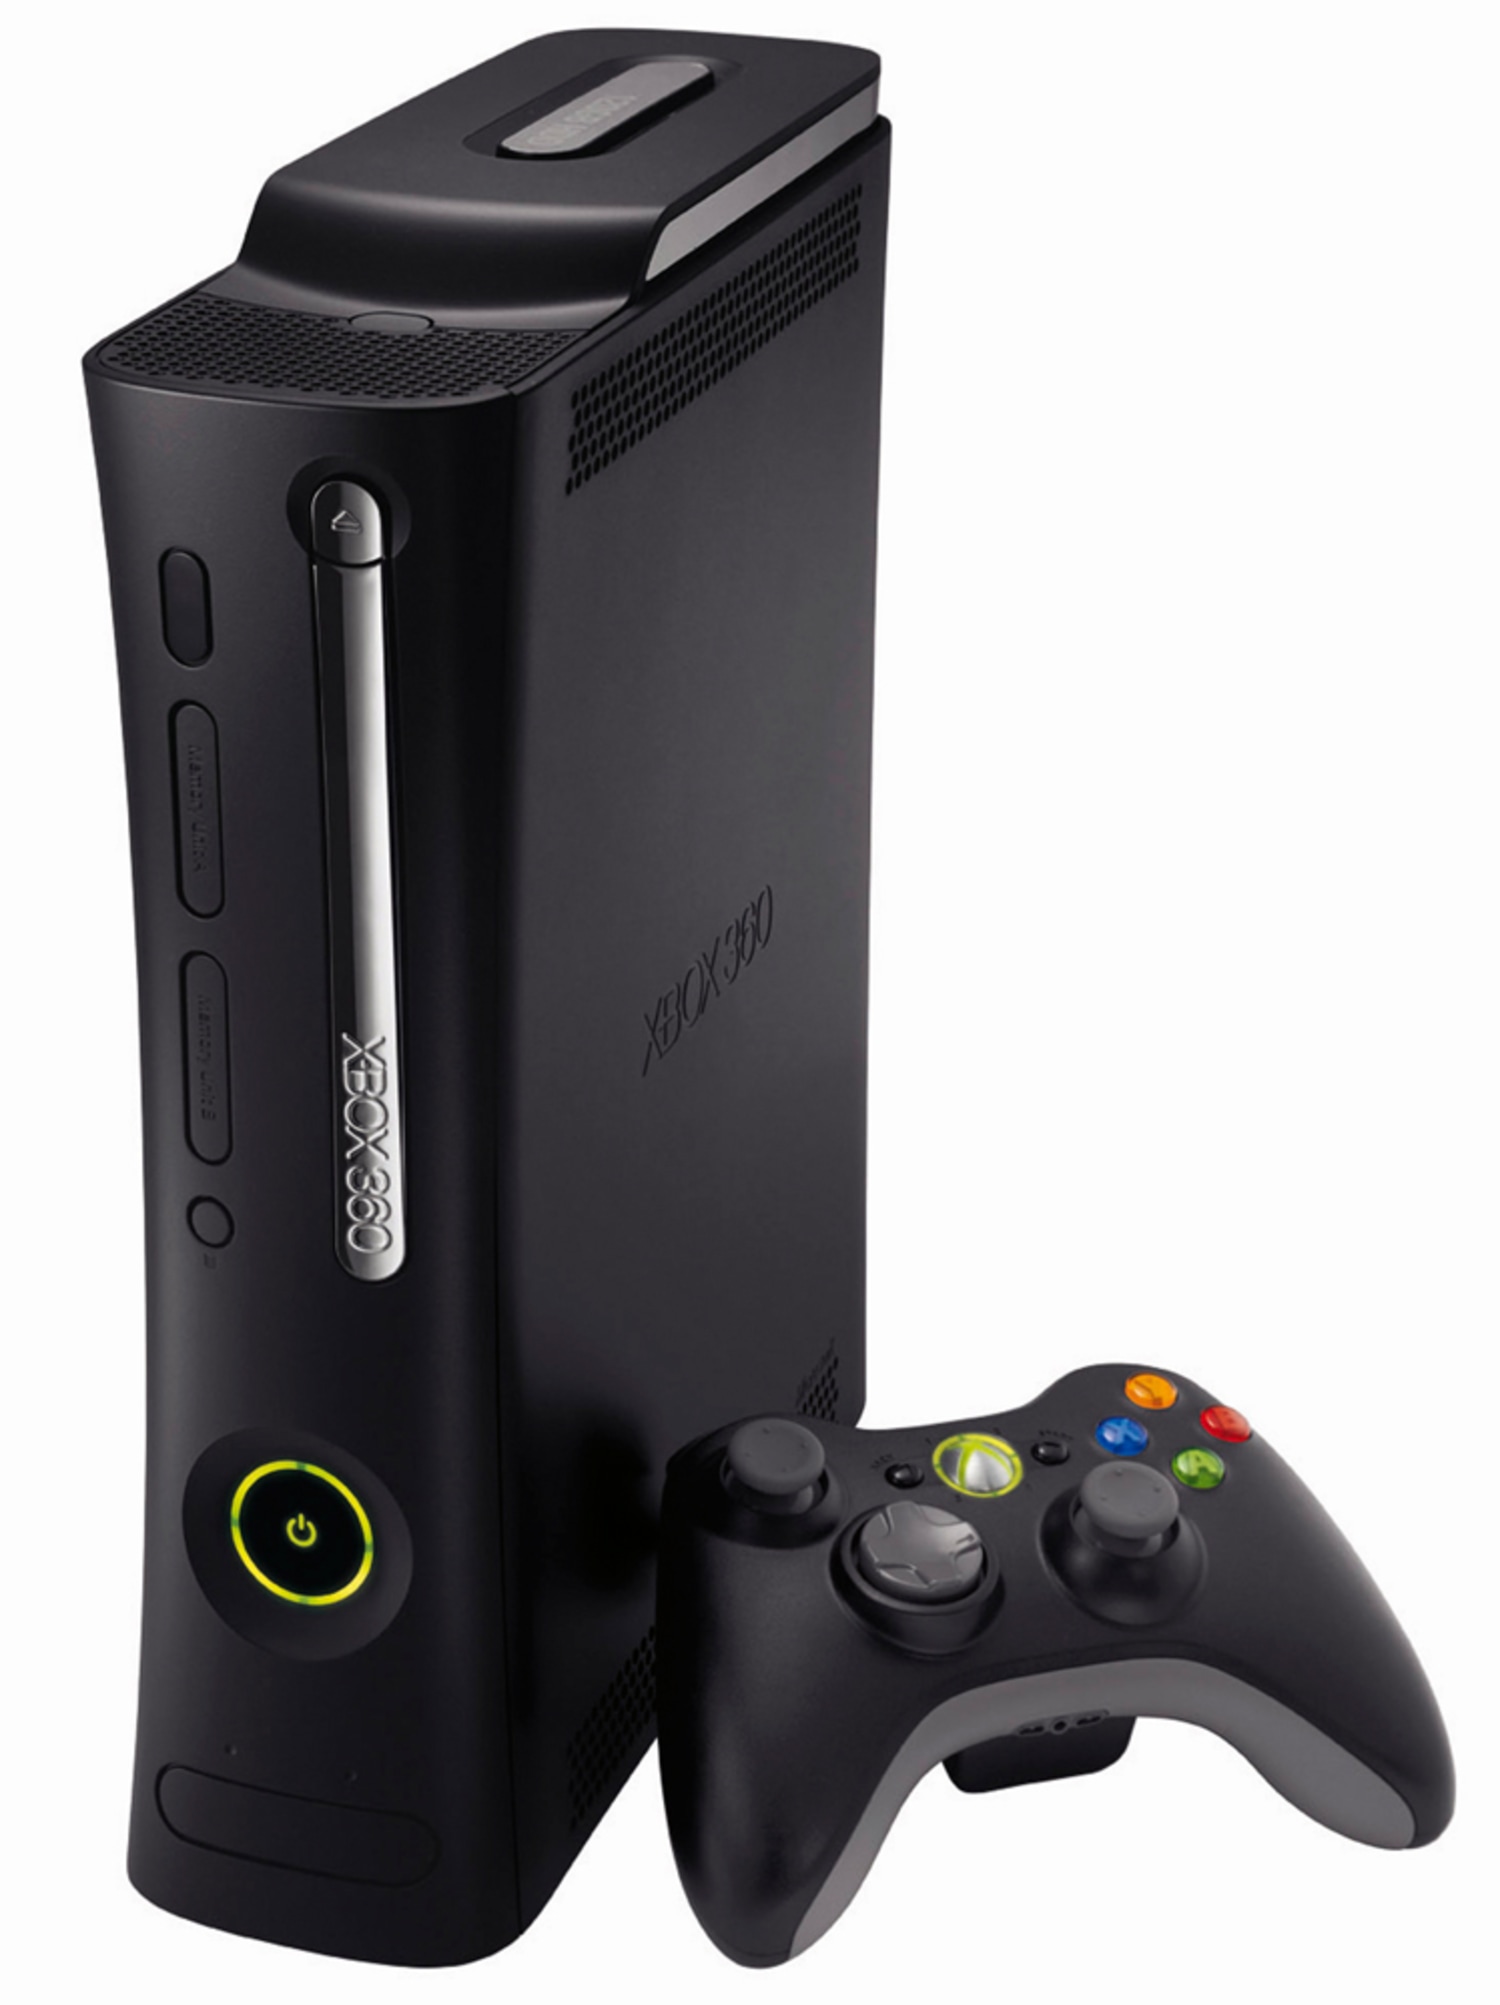 Игровые хбокс. Игровая приставка хбокс 360. Игровая приставка Xbox 360 250 GB. Xbox 360 консоль. Хбокс 360 Elite.